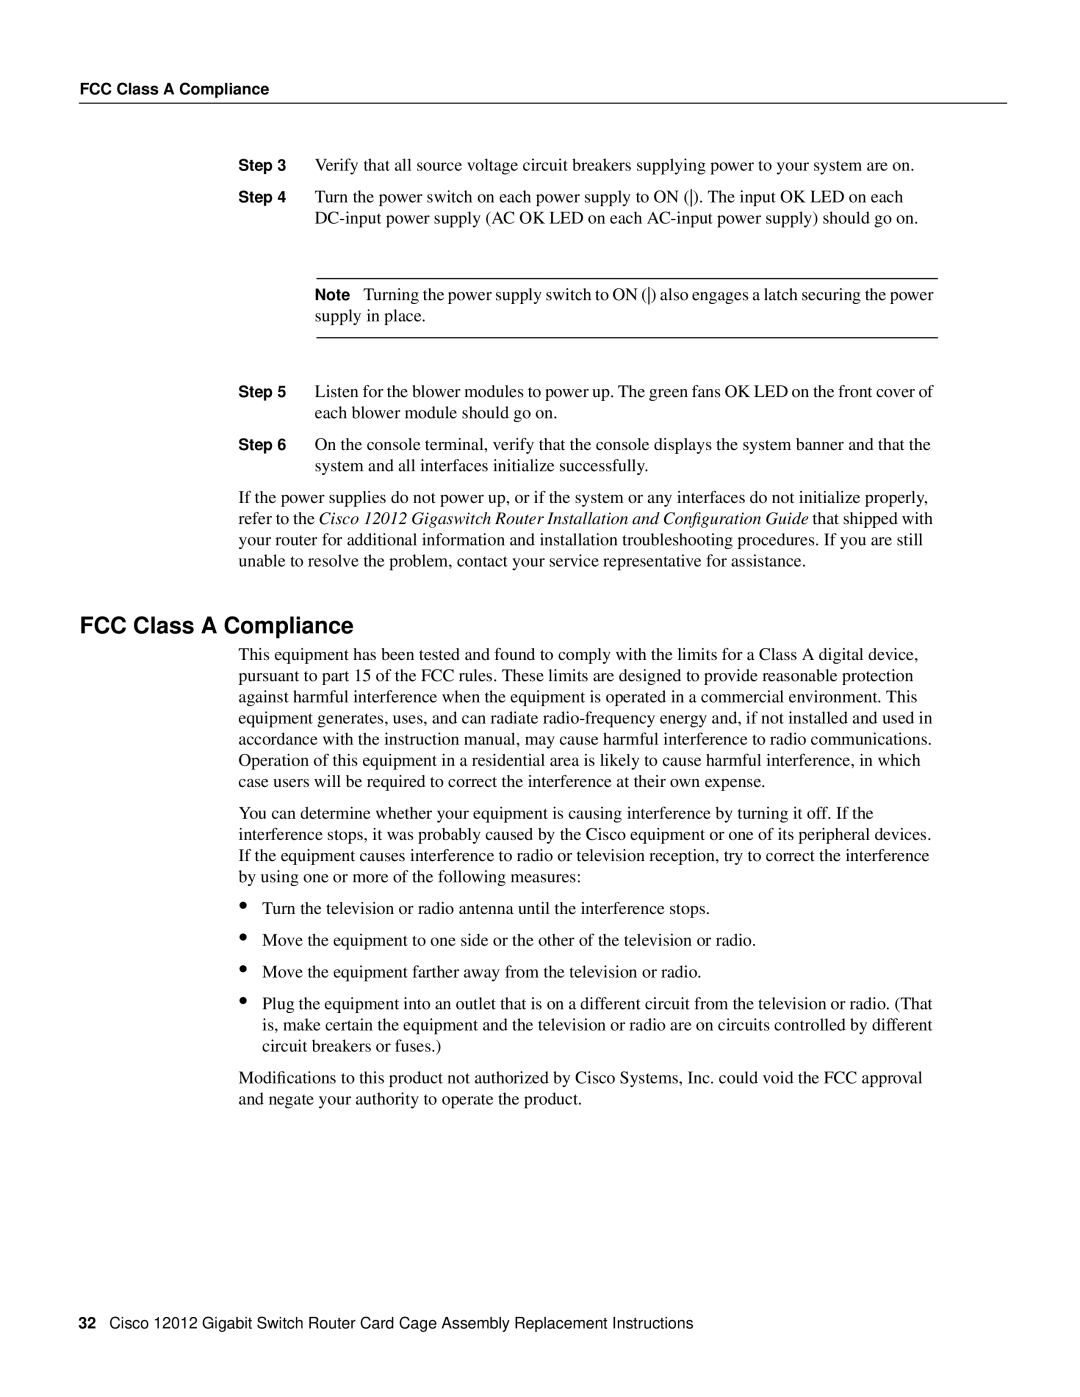 Cisco Systems 12012 manual FCC Class A Compliance 